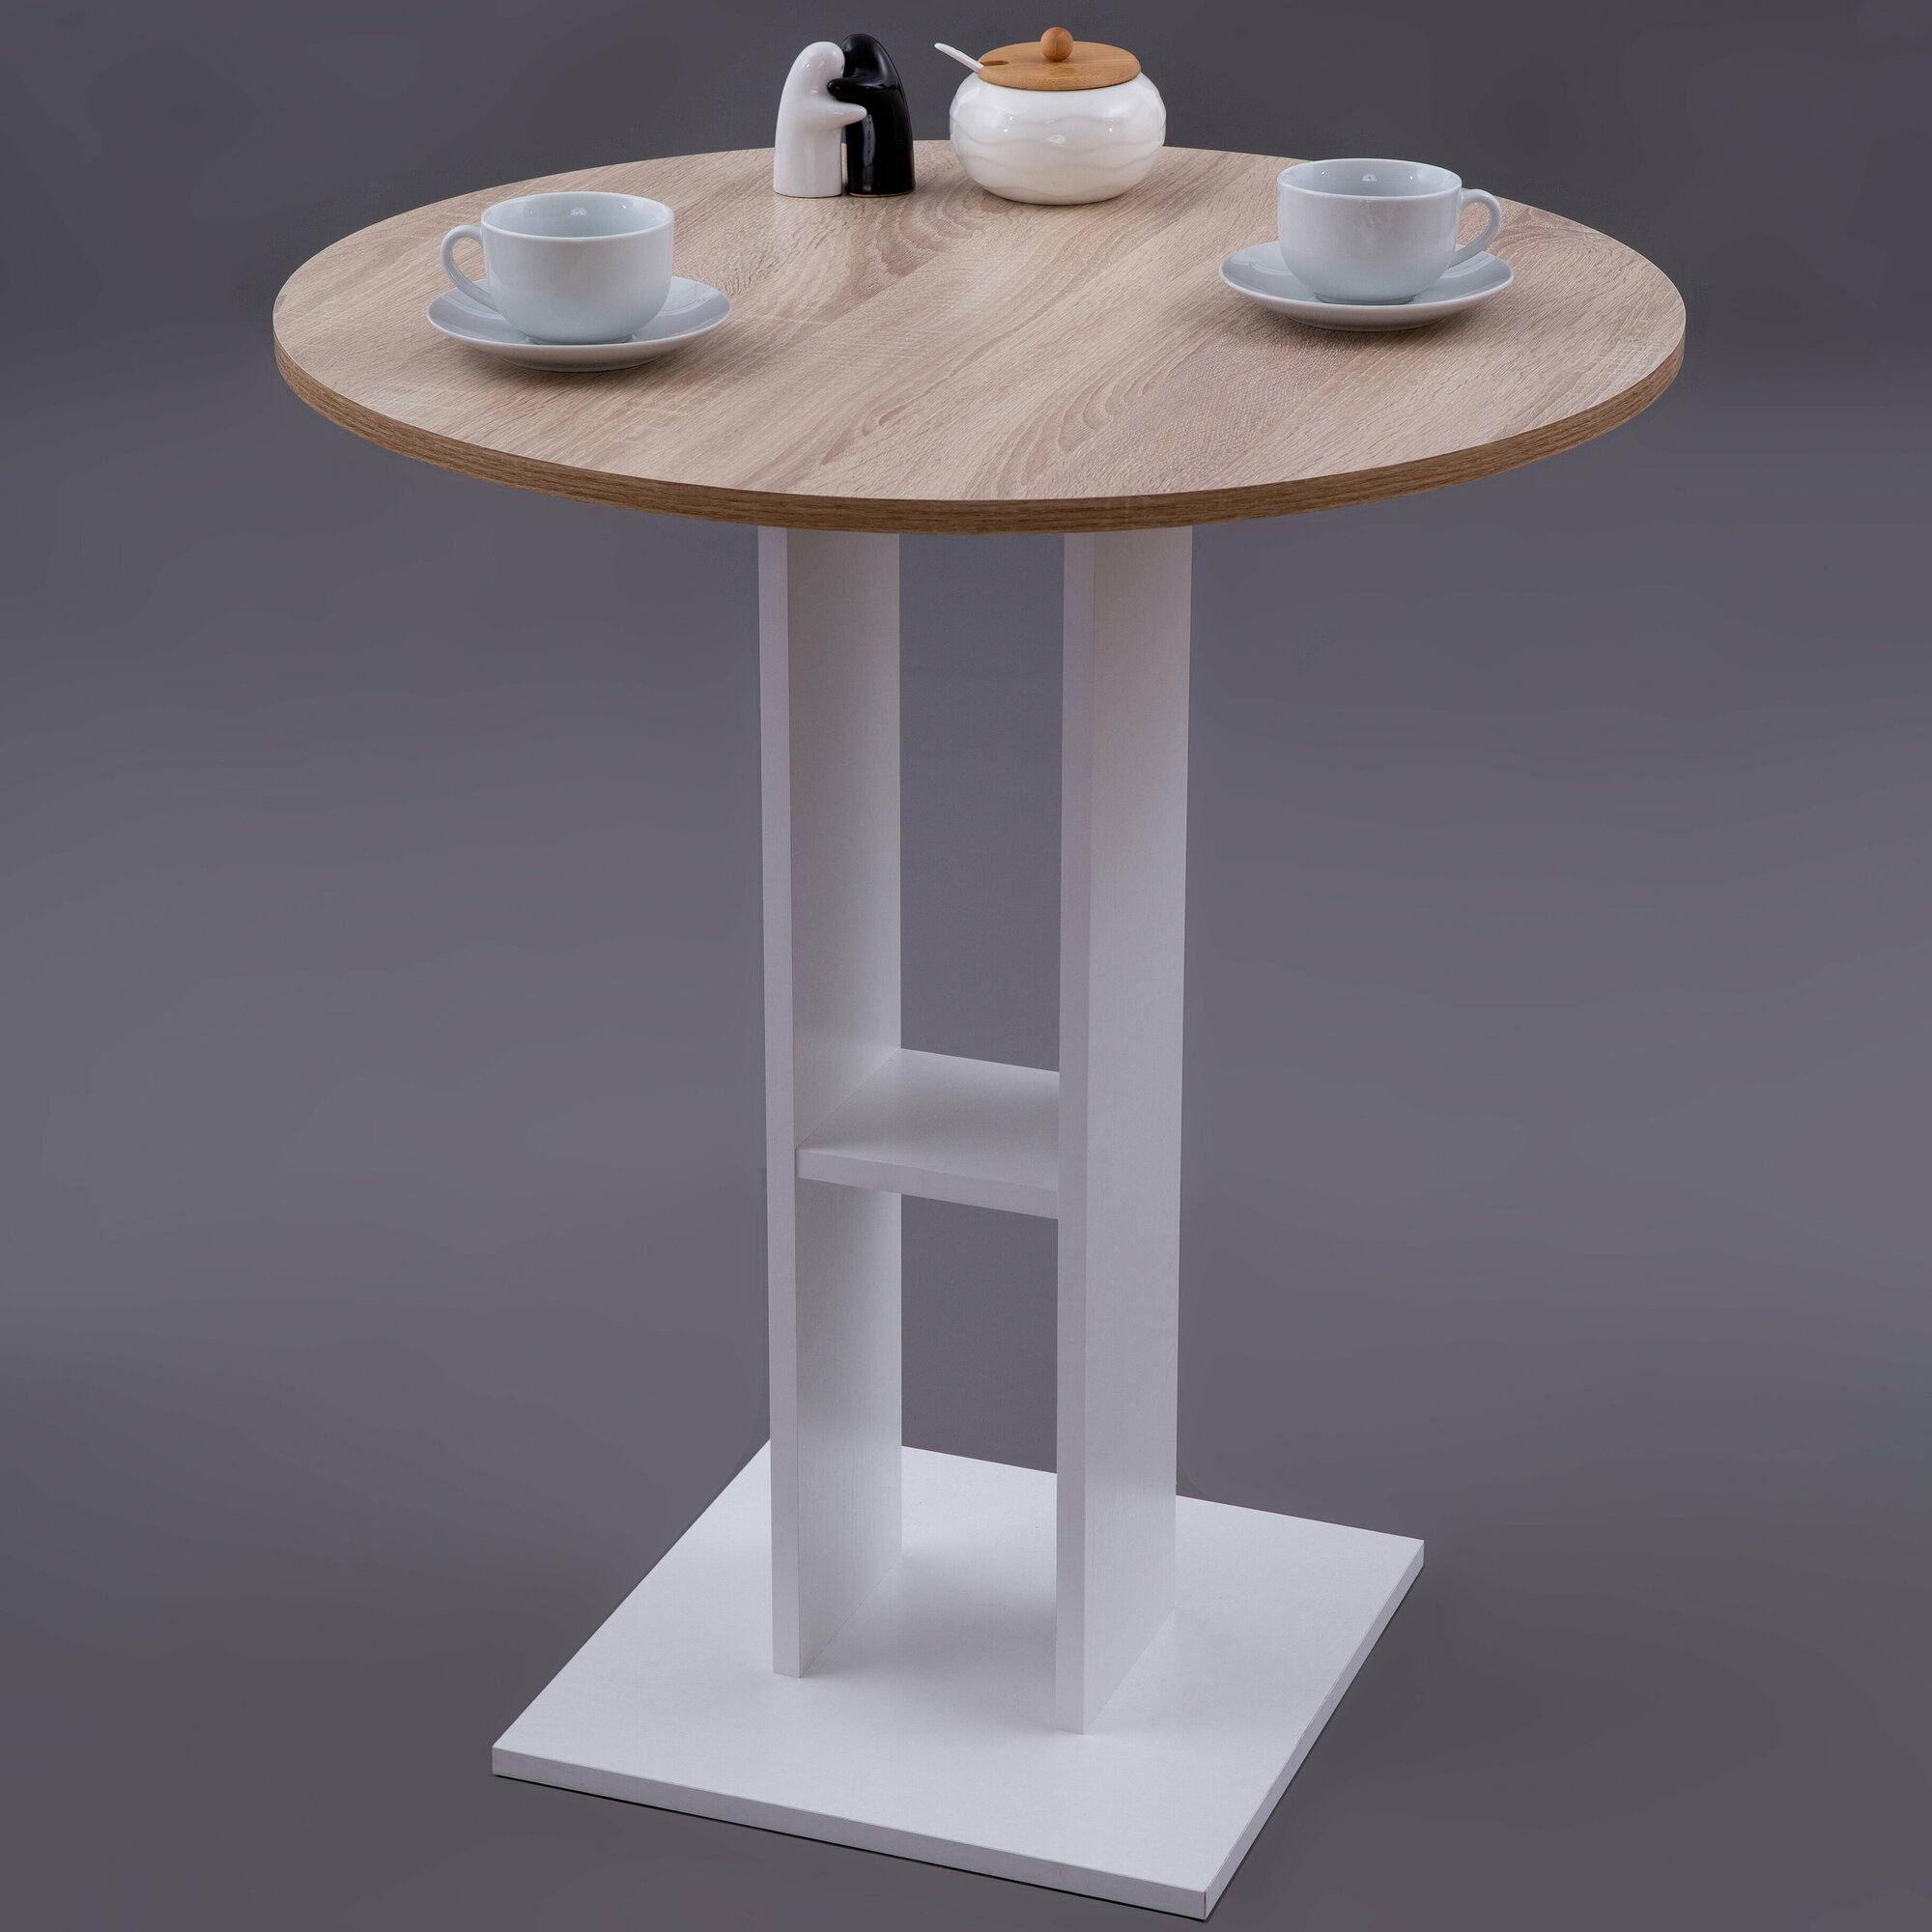 Обеденный стол Parma O, Дуб сонома/Белый, 70x70х78cм, VERAMENTE